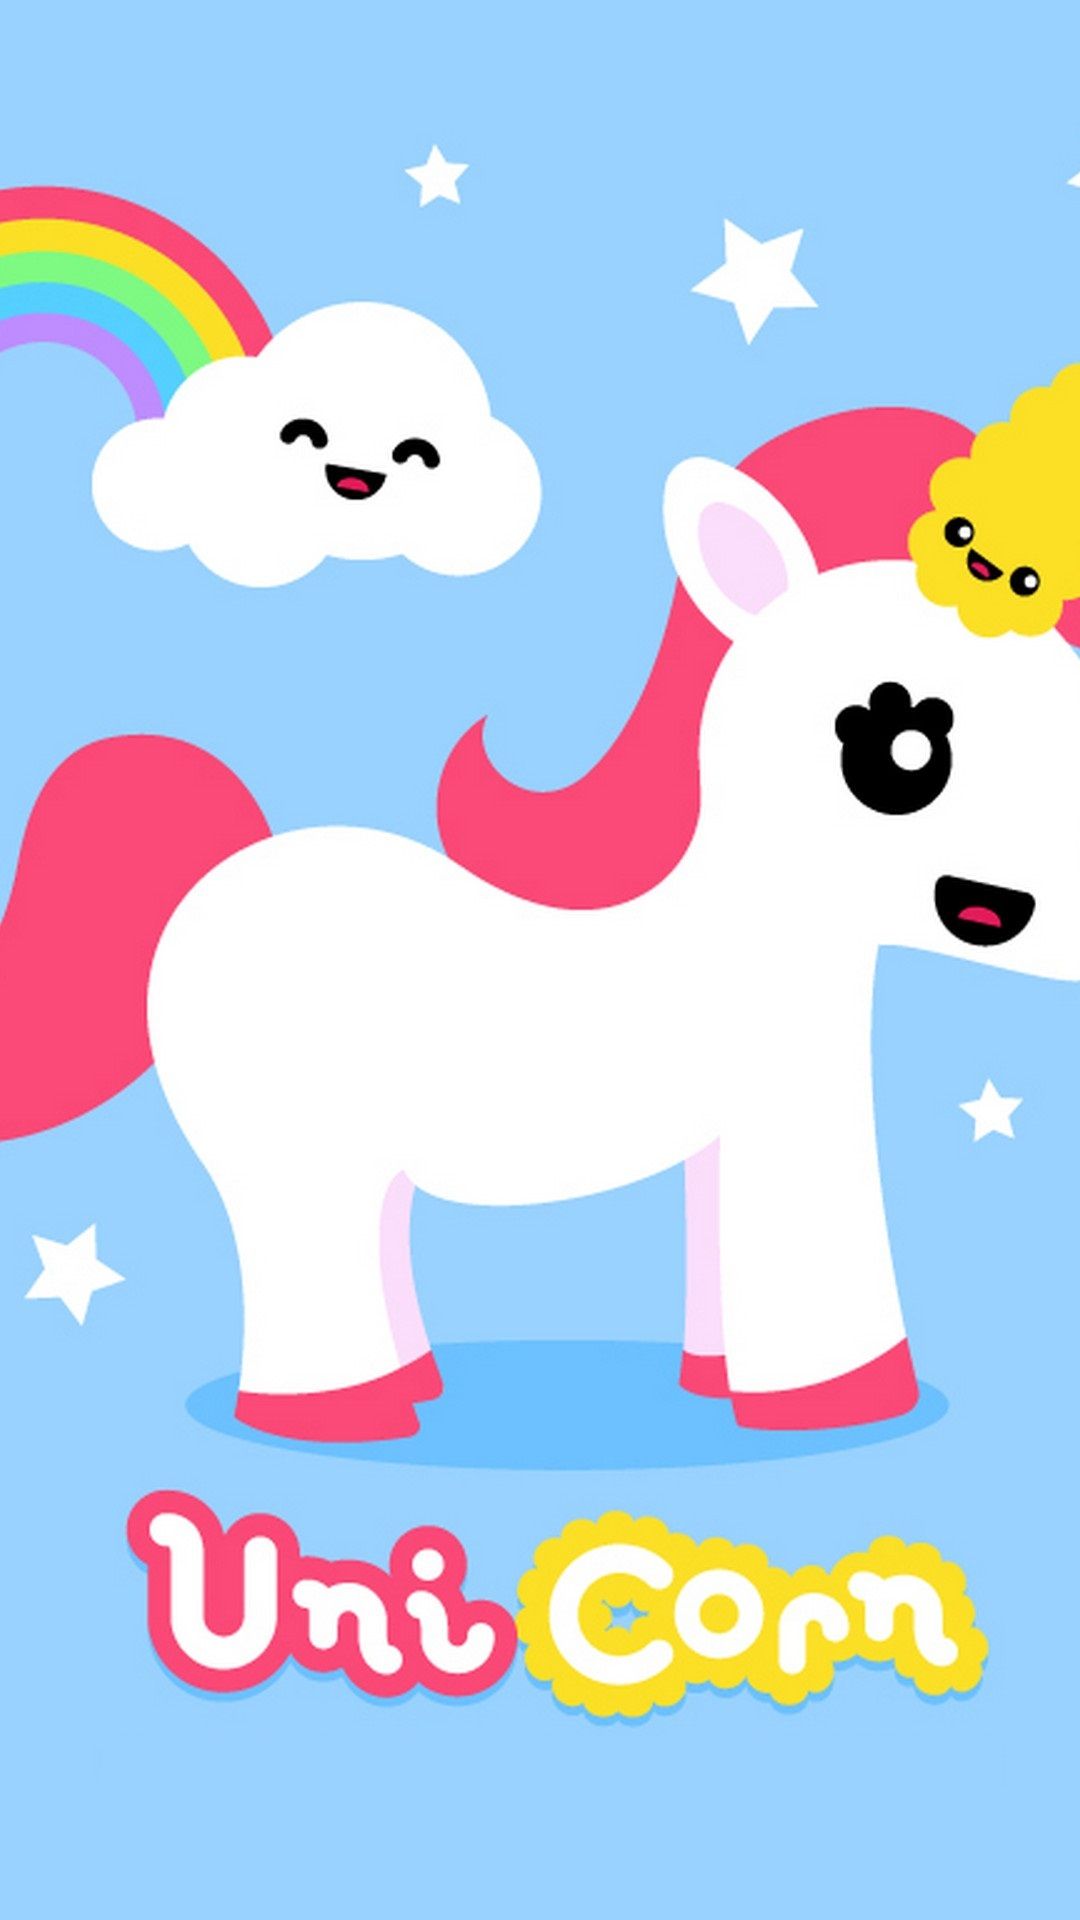 Cute Girly Unicorn iPhone Wallpaper .cuteiphonewallpaper.com